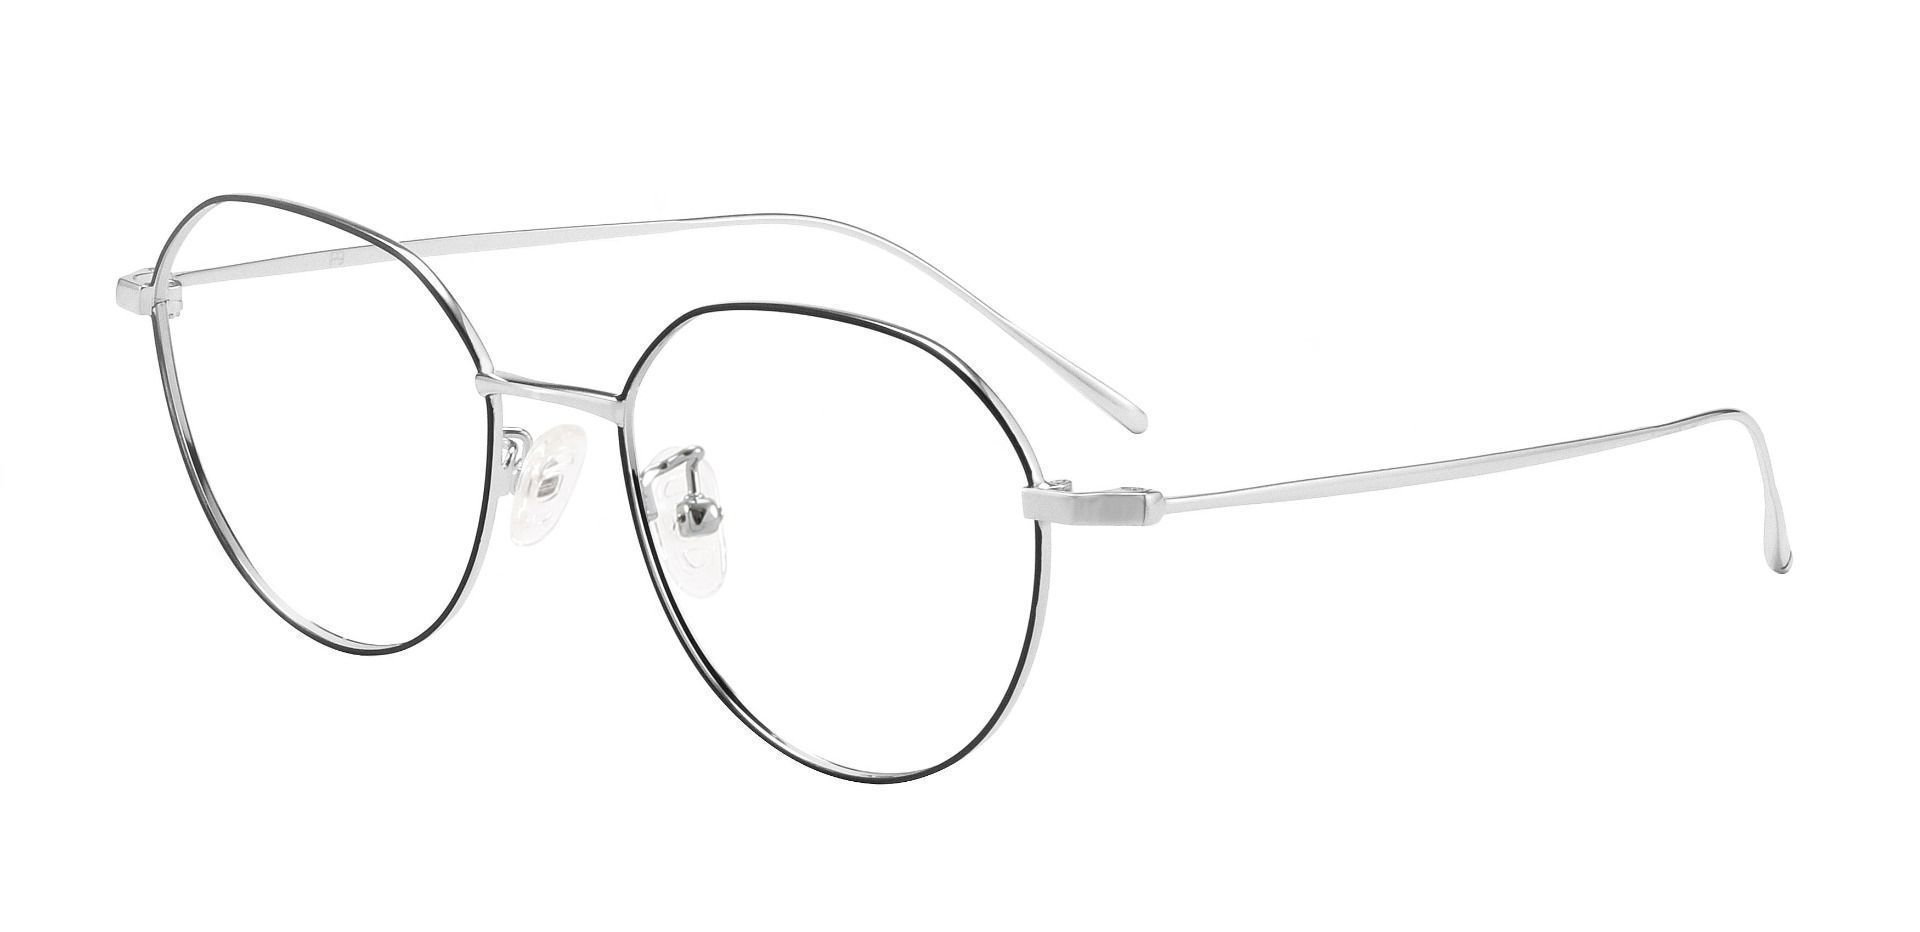 Celsius Geometric Prescription Glasses - Silver